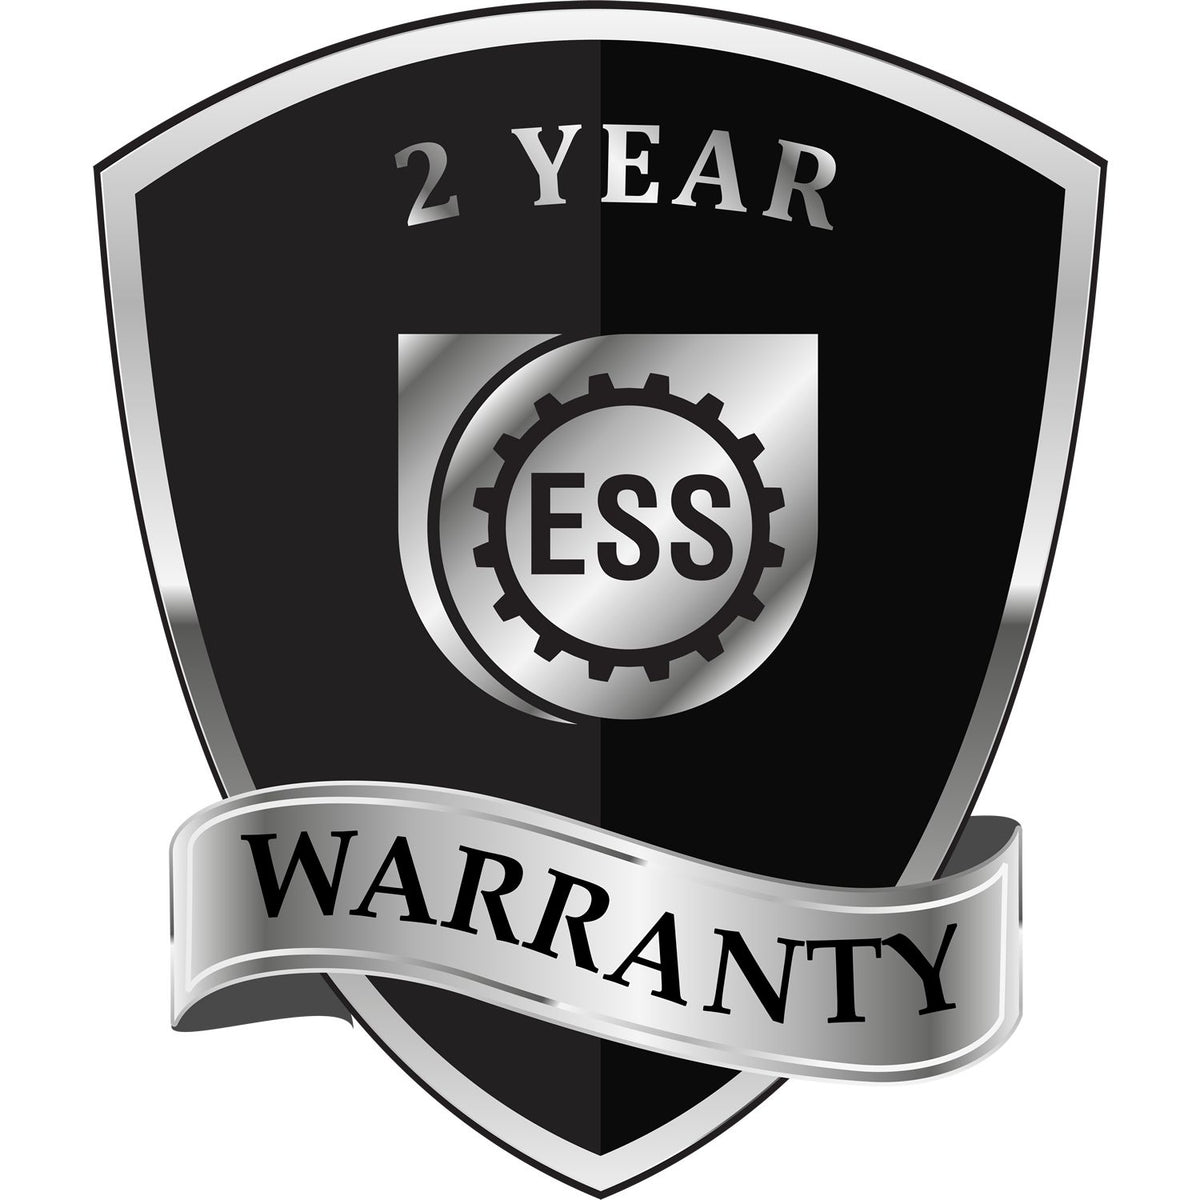 A black and silver badge or emblem showing warranty information for the Hybrid Oklahoma Land Surveyor Seal